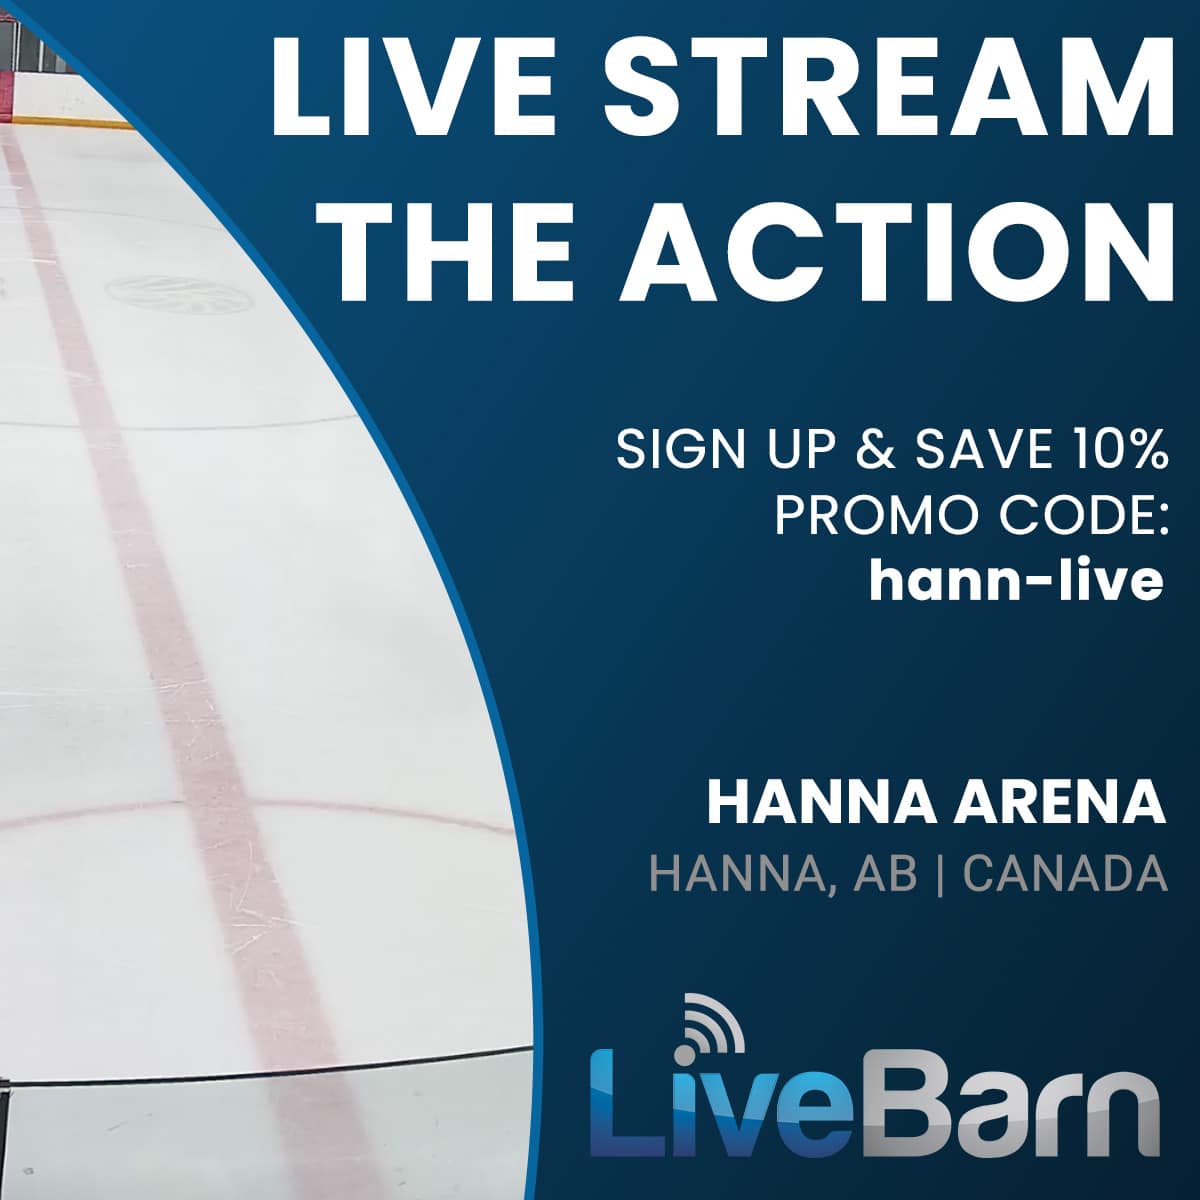 Hanna Arena has LiveBarn